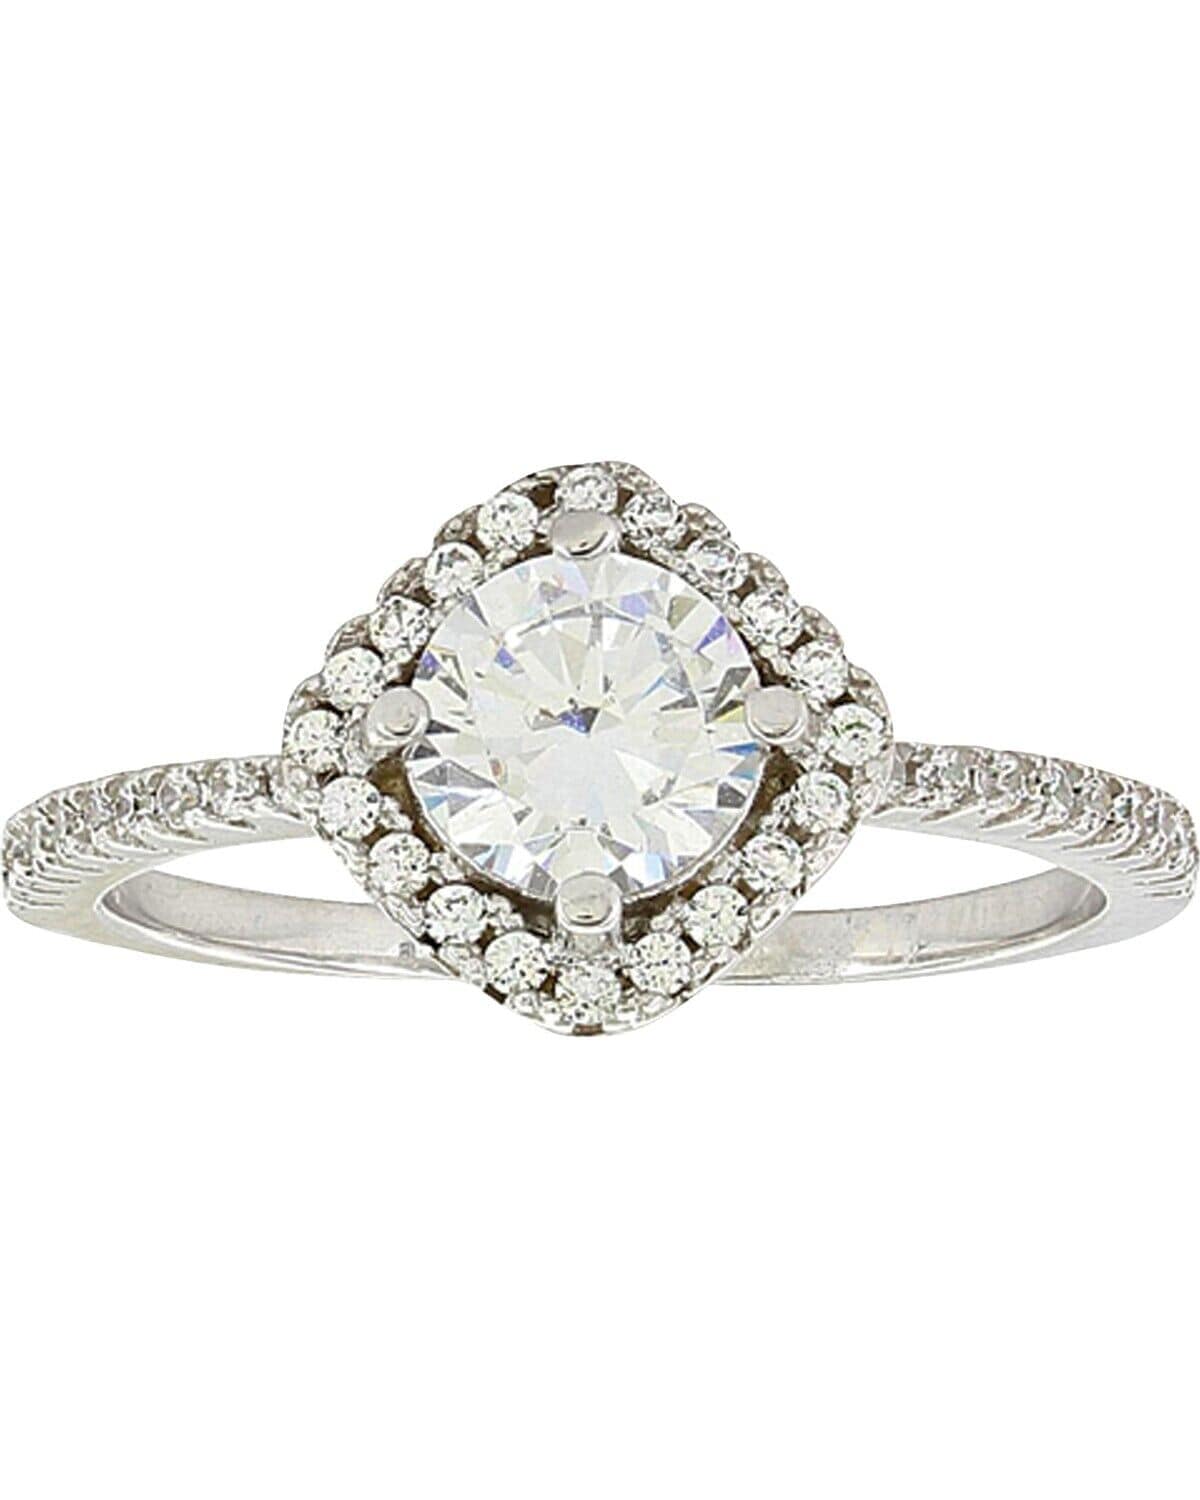 MONTANA SILVERSMITHS Jewelry Montana Silversmiths Women's Squarely Perfect Haloed Ring RG3183